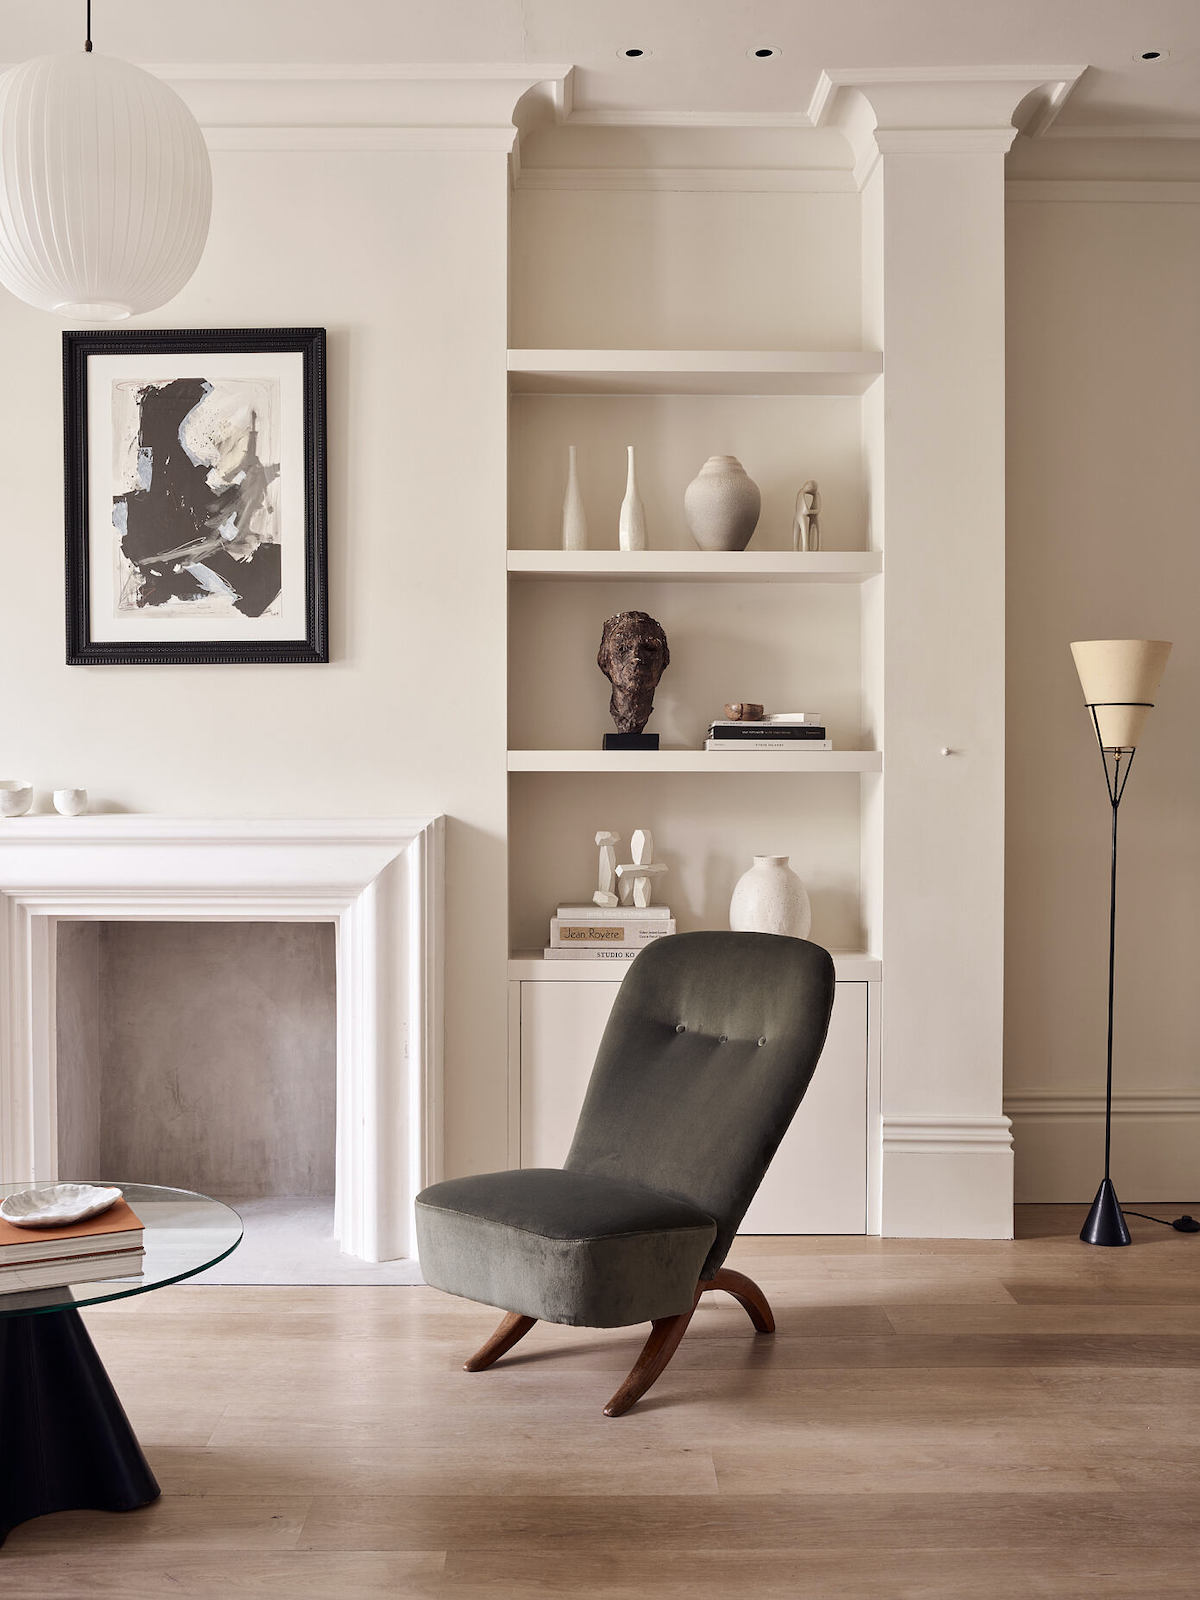 salon minimaliste élégance anglaise façon cabinet de curiosités galerie art